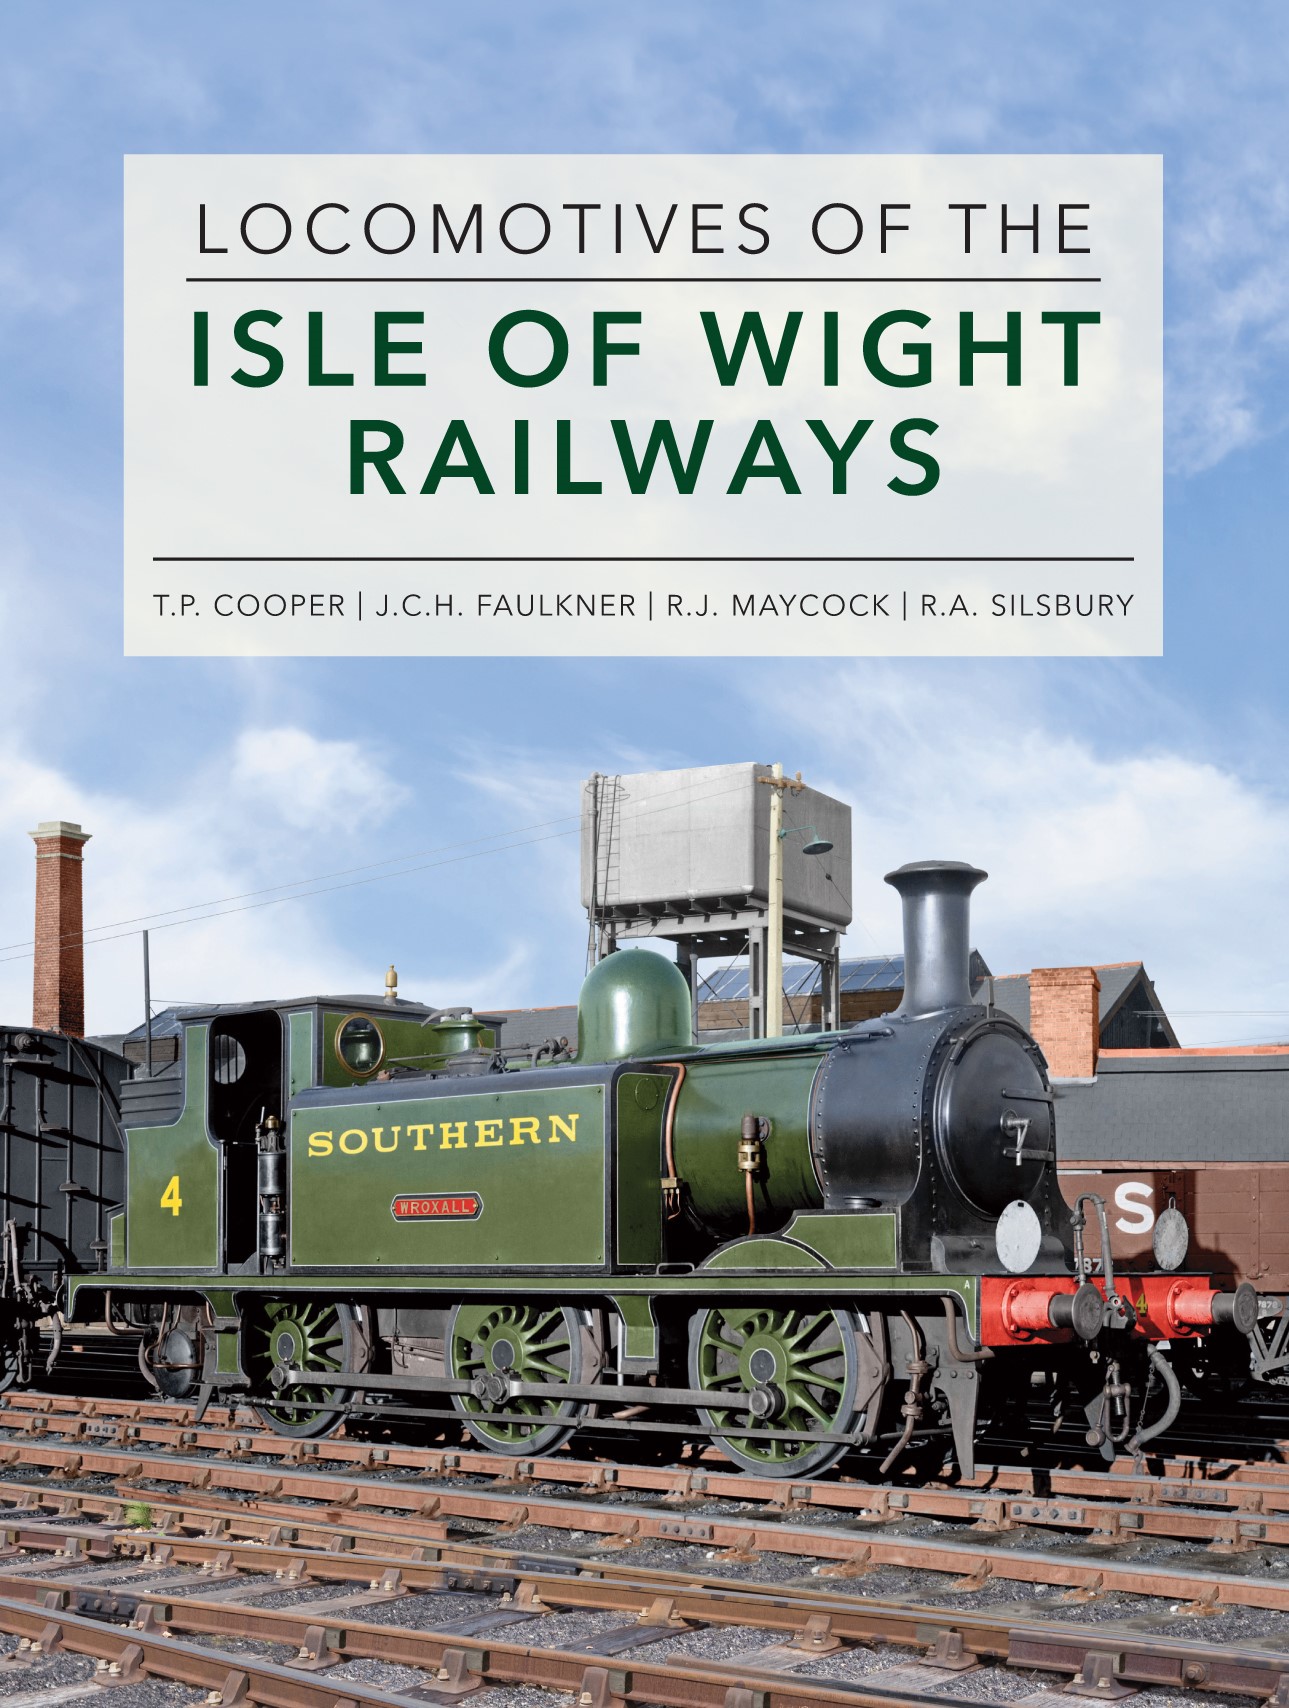 The Locomotives of the Isle of Wight Railways